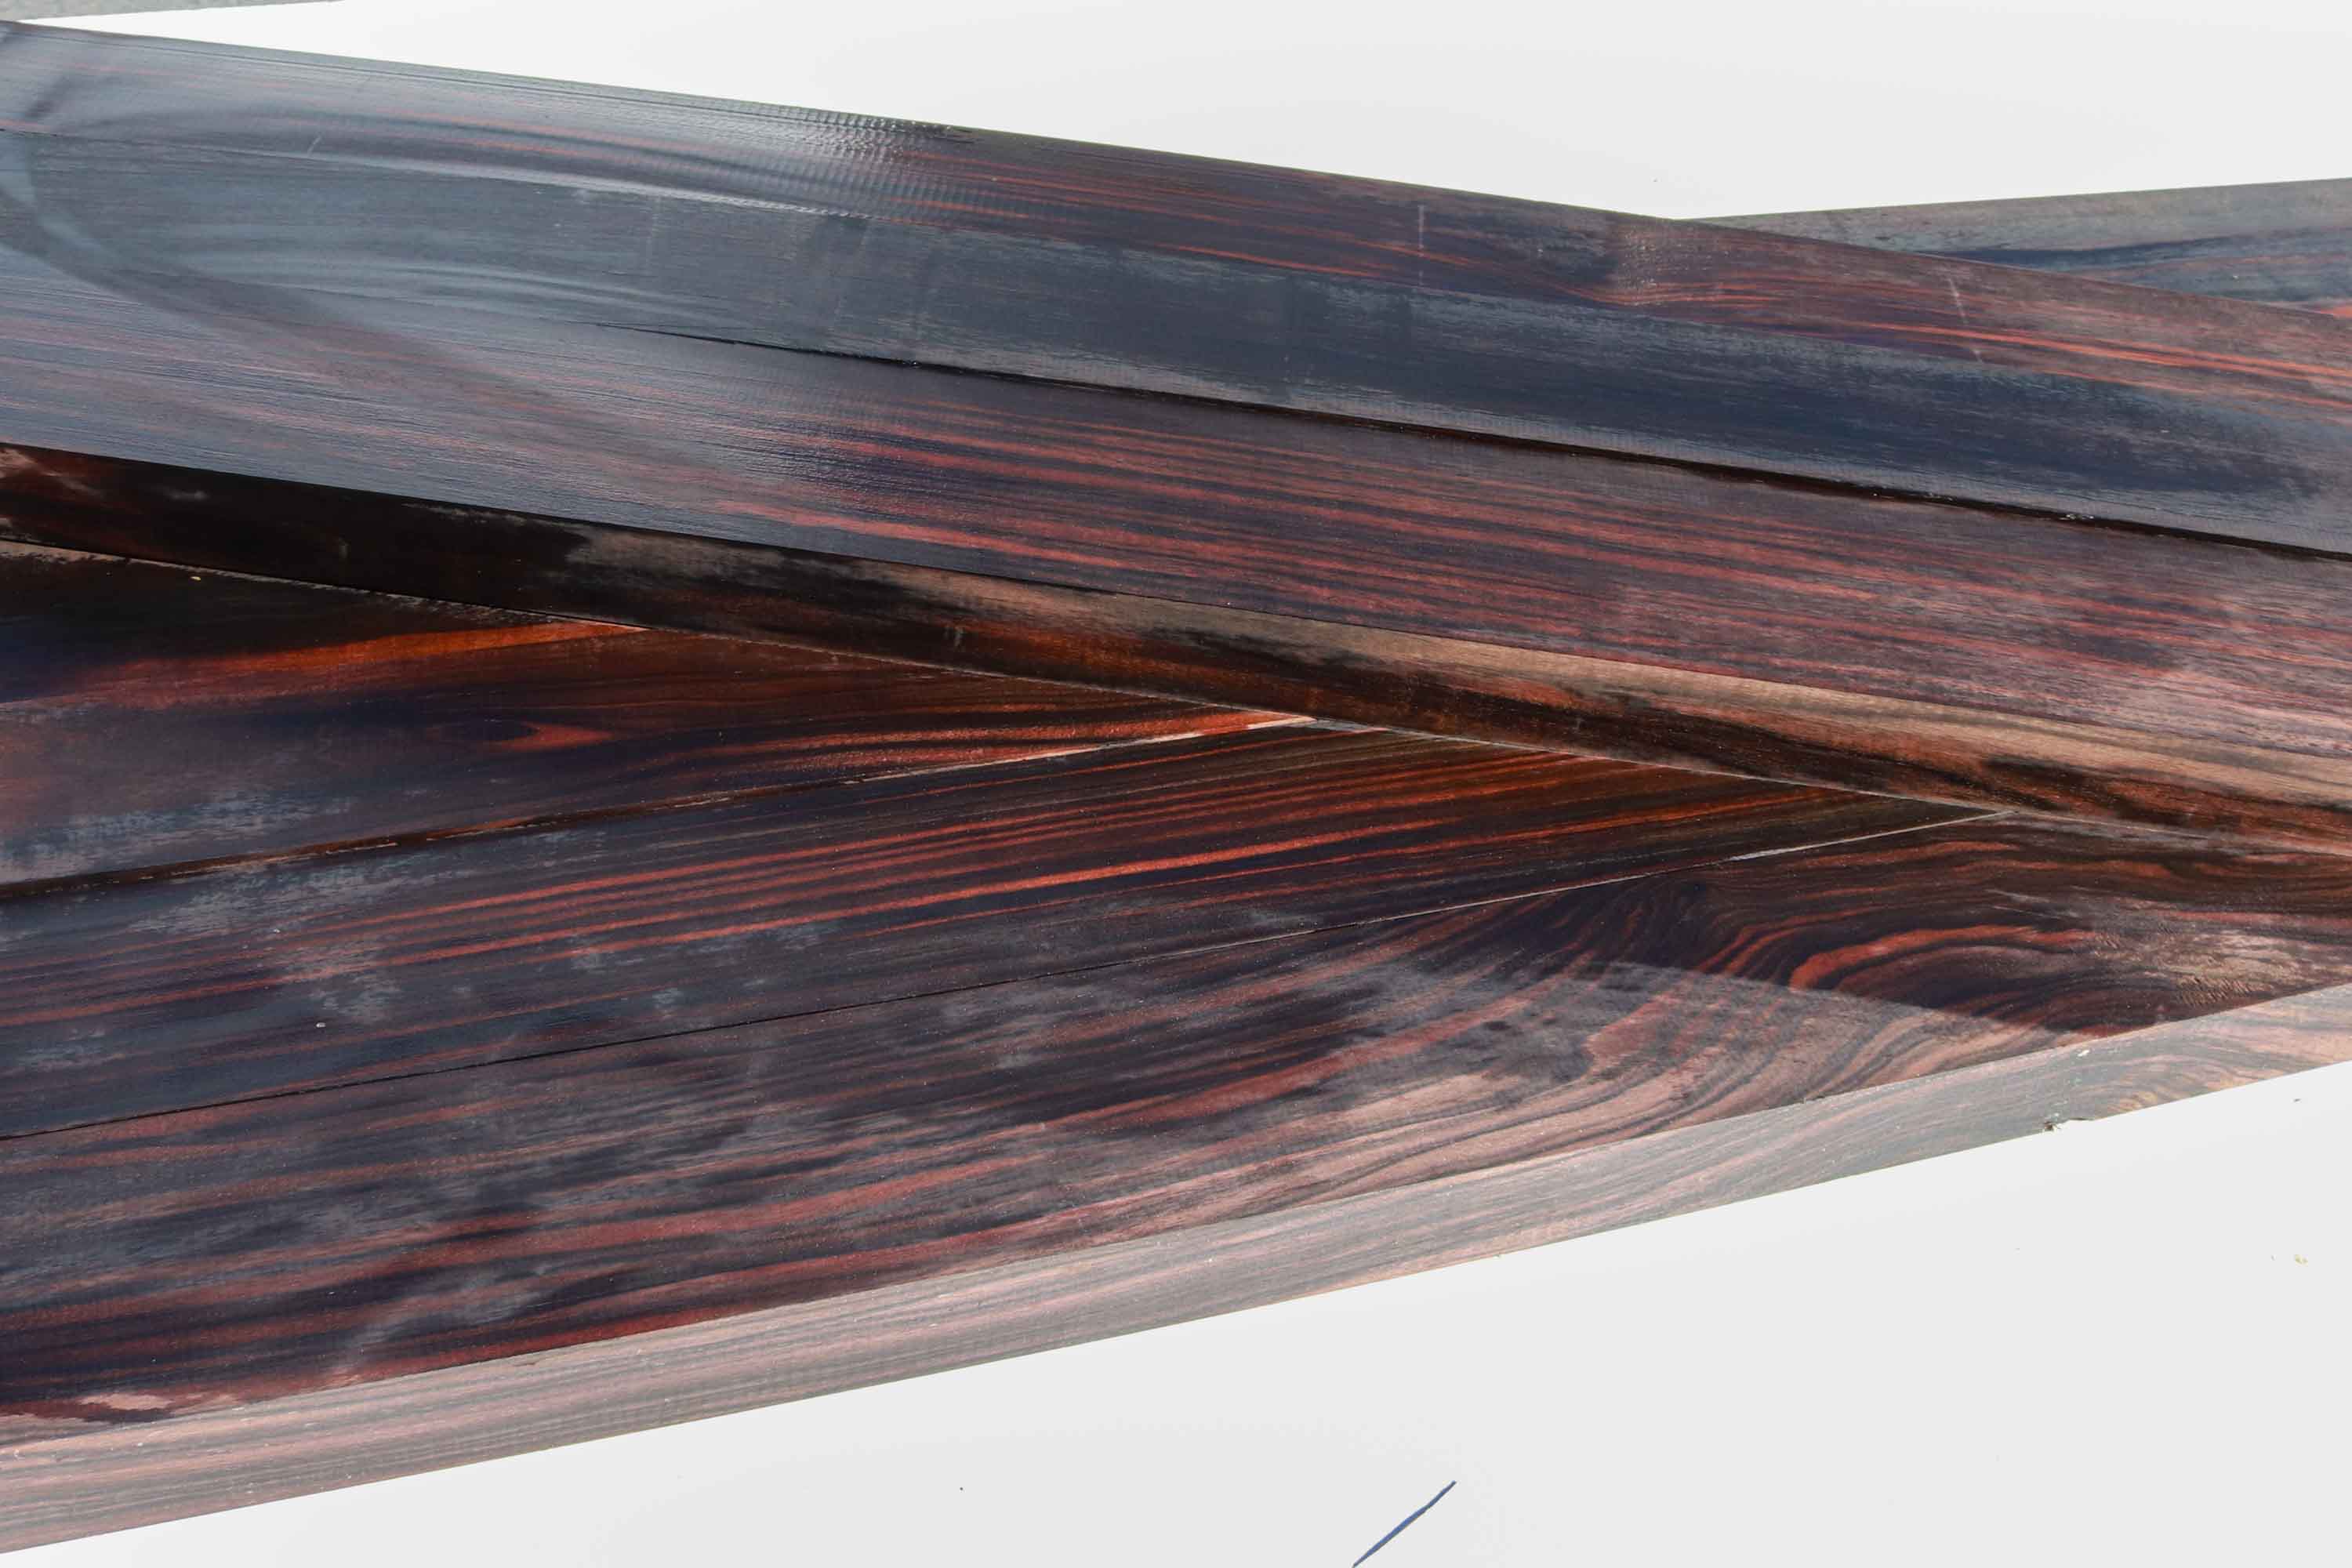 Ebony - Macassar Lumber For Sale • Rare Woods USA